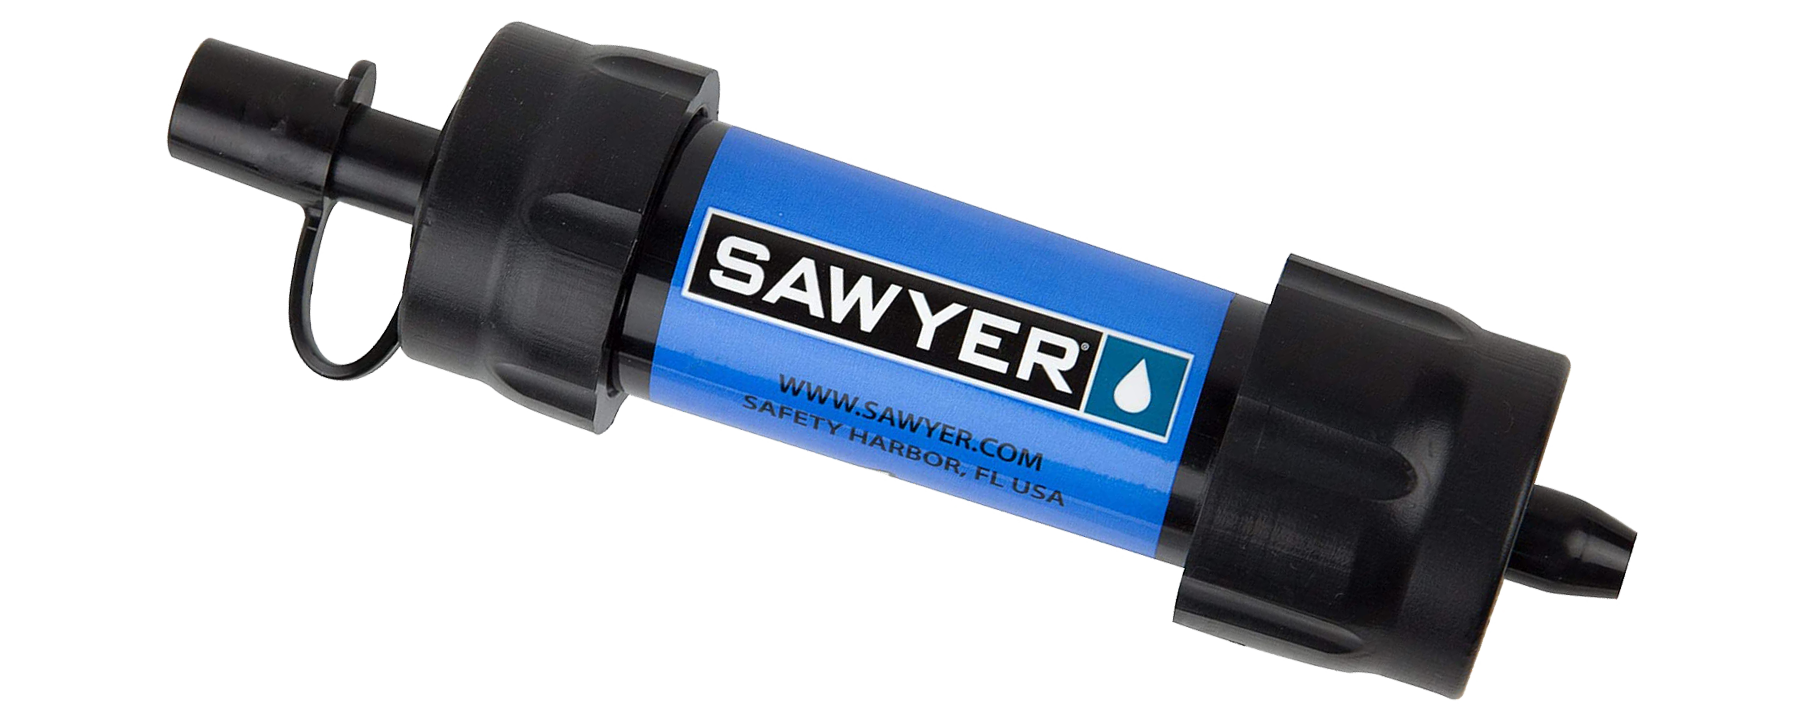 Sawyer MINI water filtration system